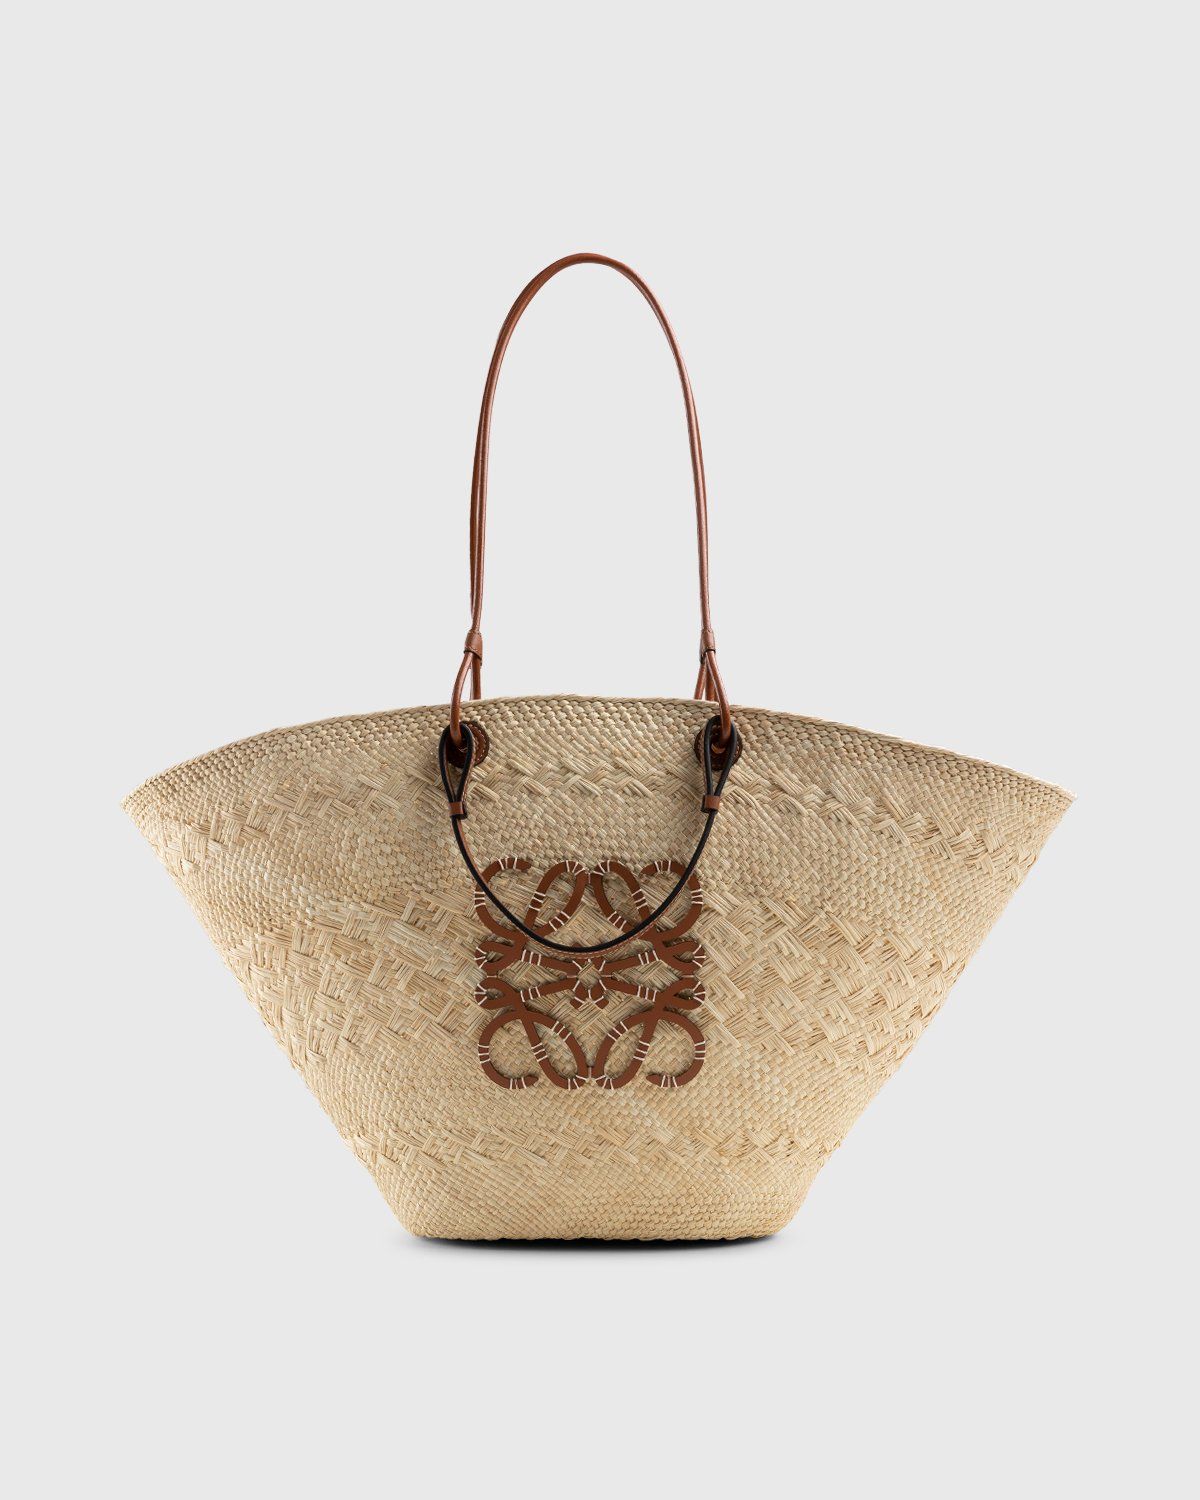 Loewe – Paula's Ibiza Large Anagram Basket Bag Natural/Tan - Bags - Beige - Image 1